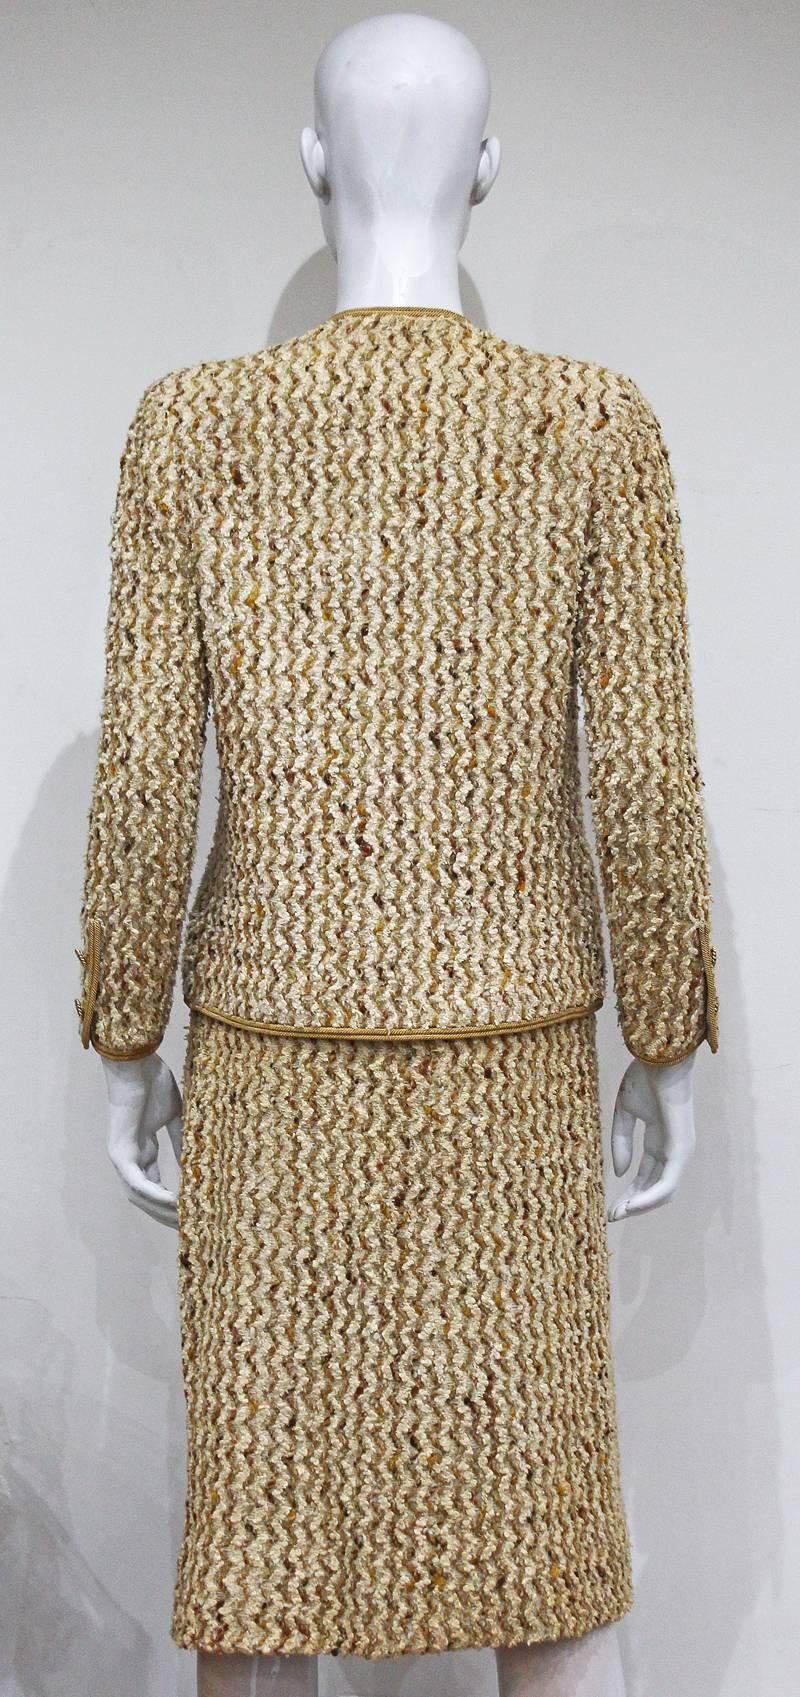 Brown Chanel haute couture bouclé skirt suit, c.1965